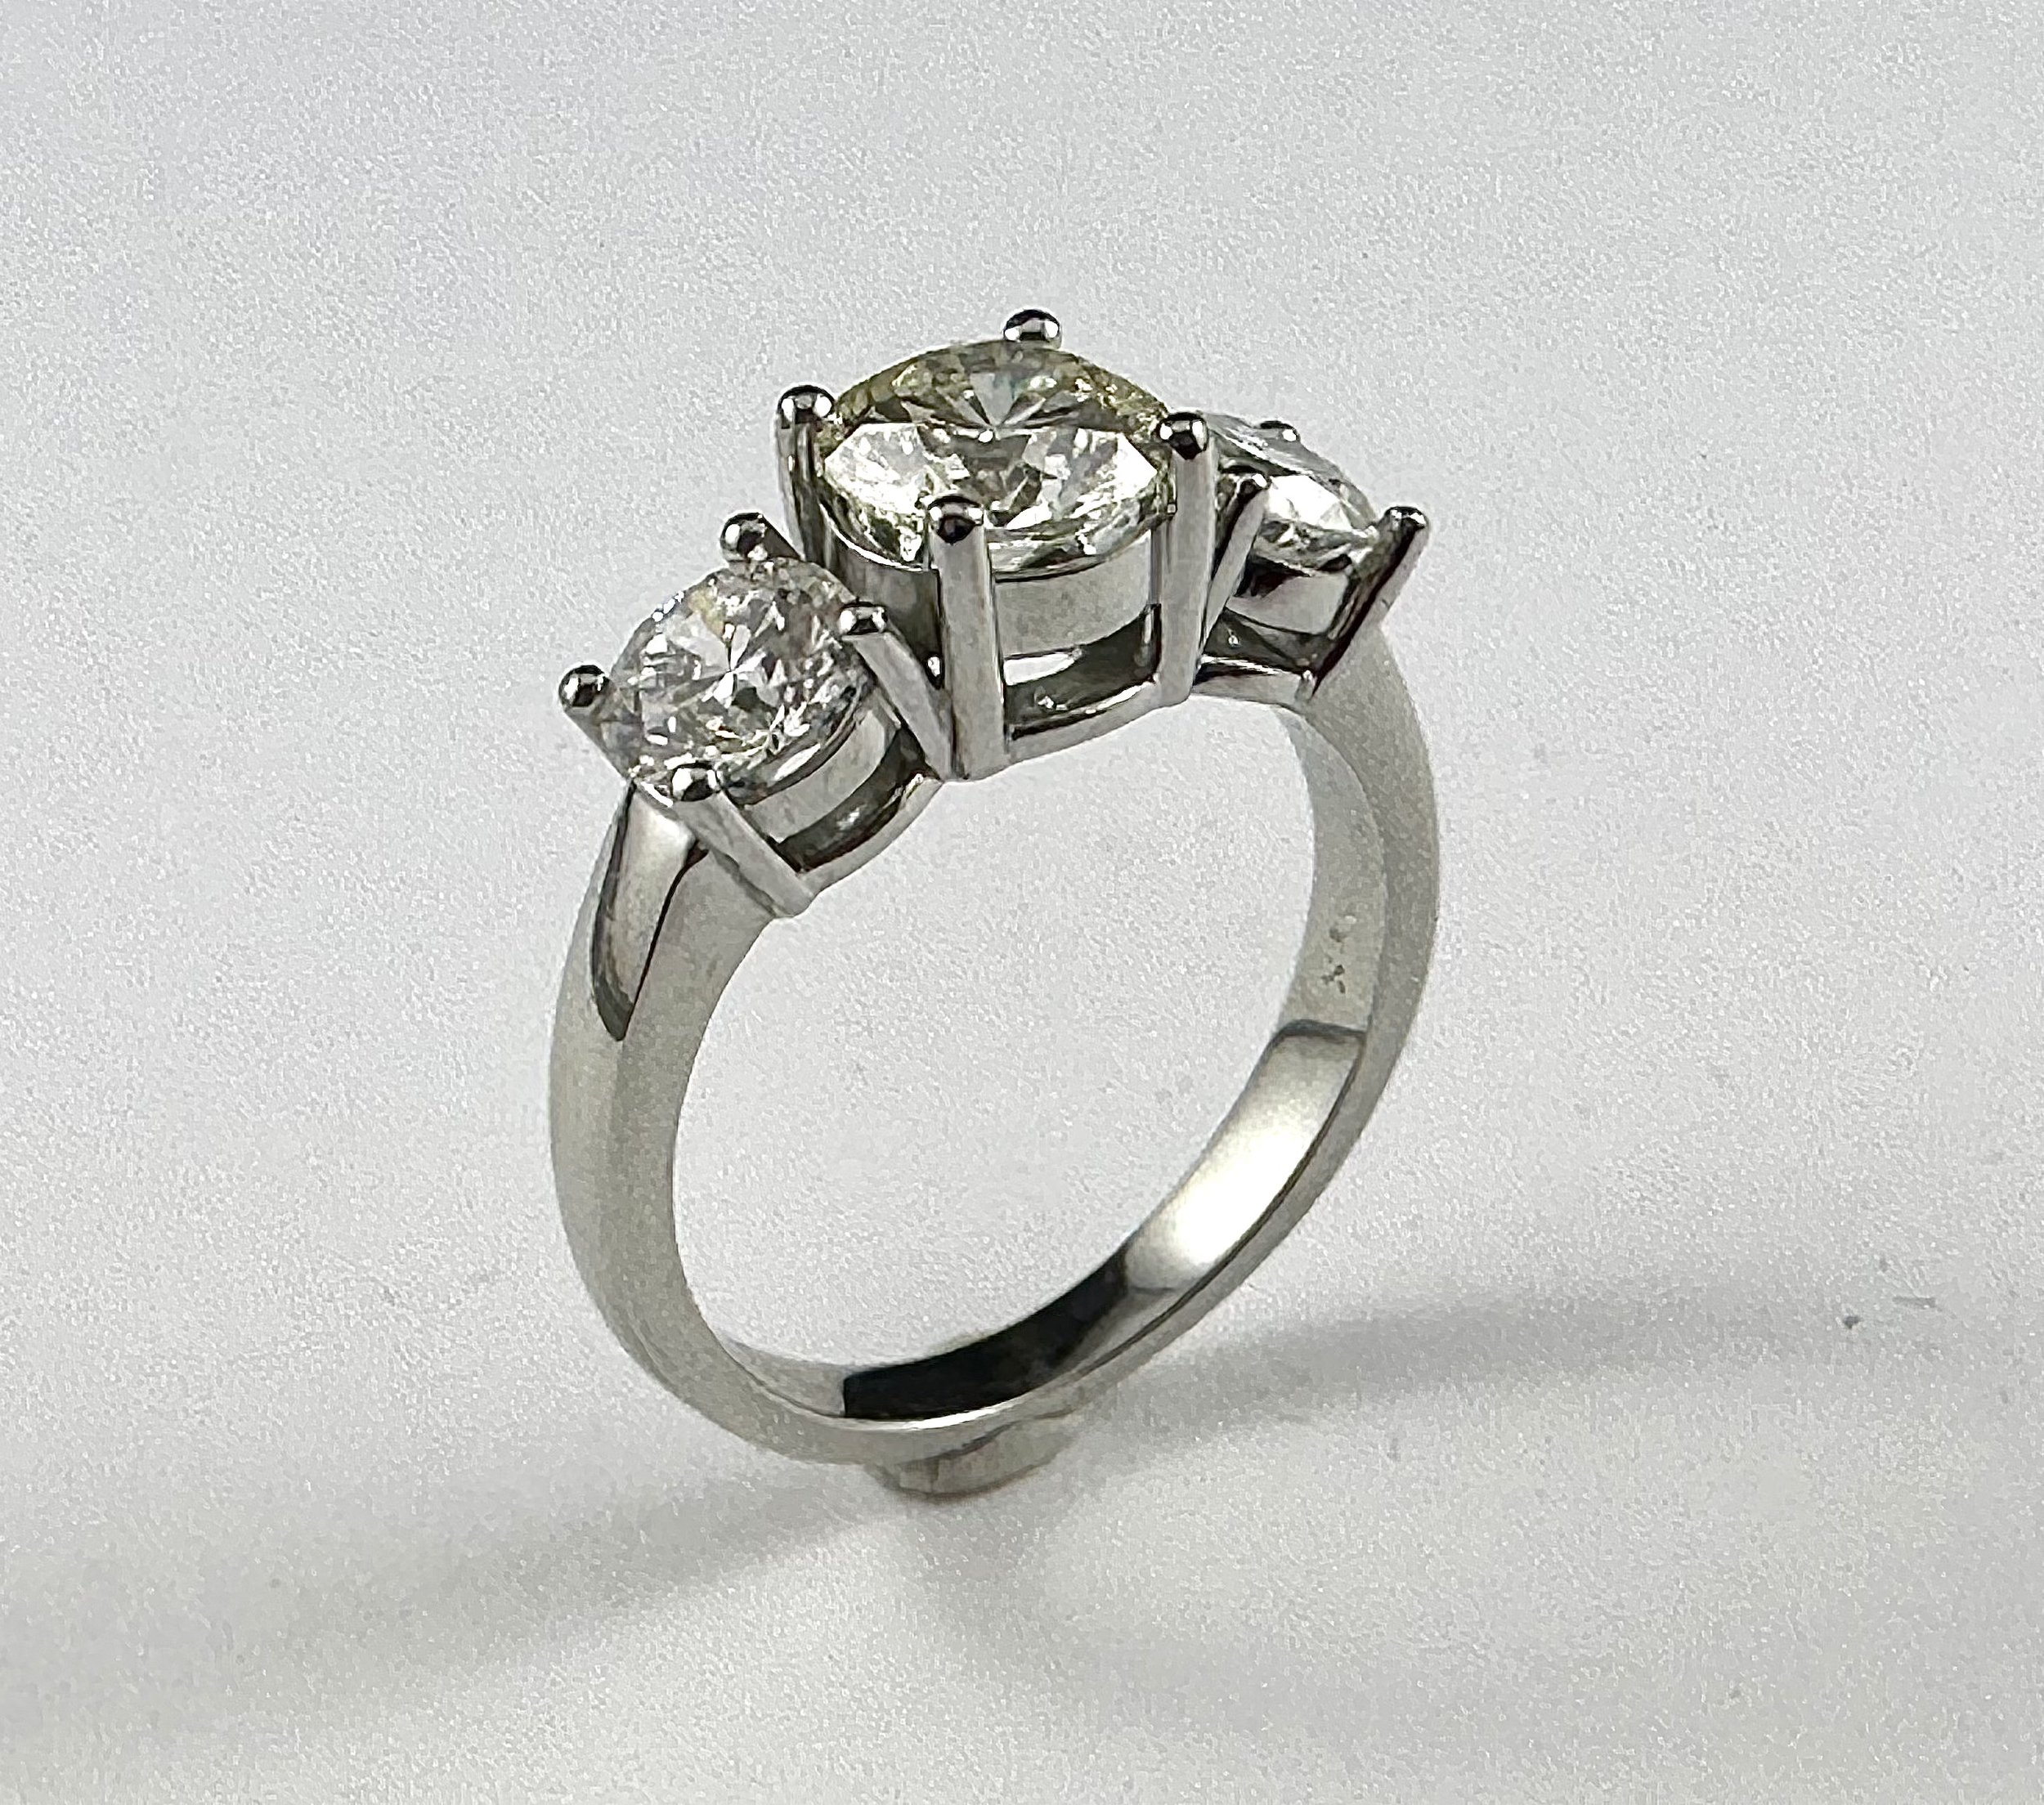 19K White Gold Three Diamond Ring